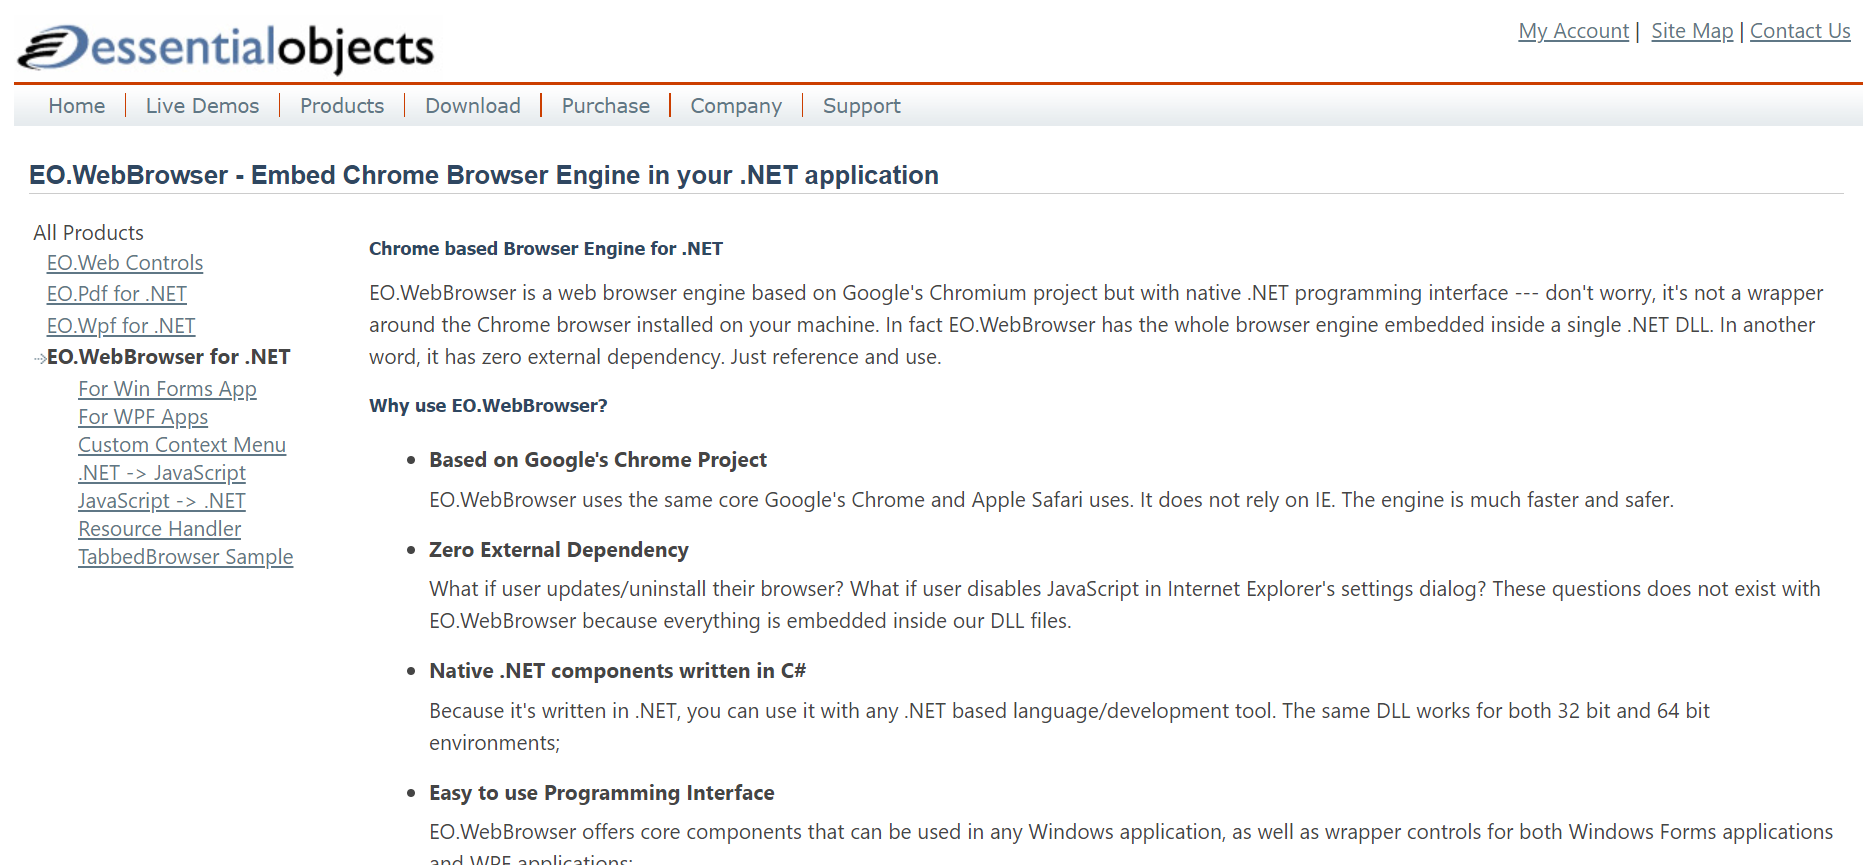 .NET桌面程序集成Web网页开发的多种解决方案